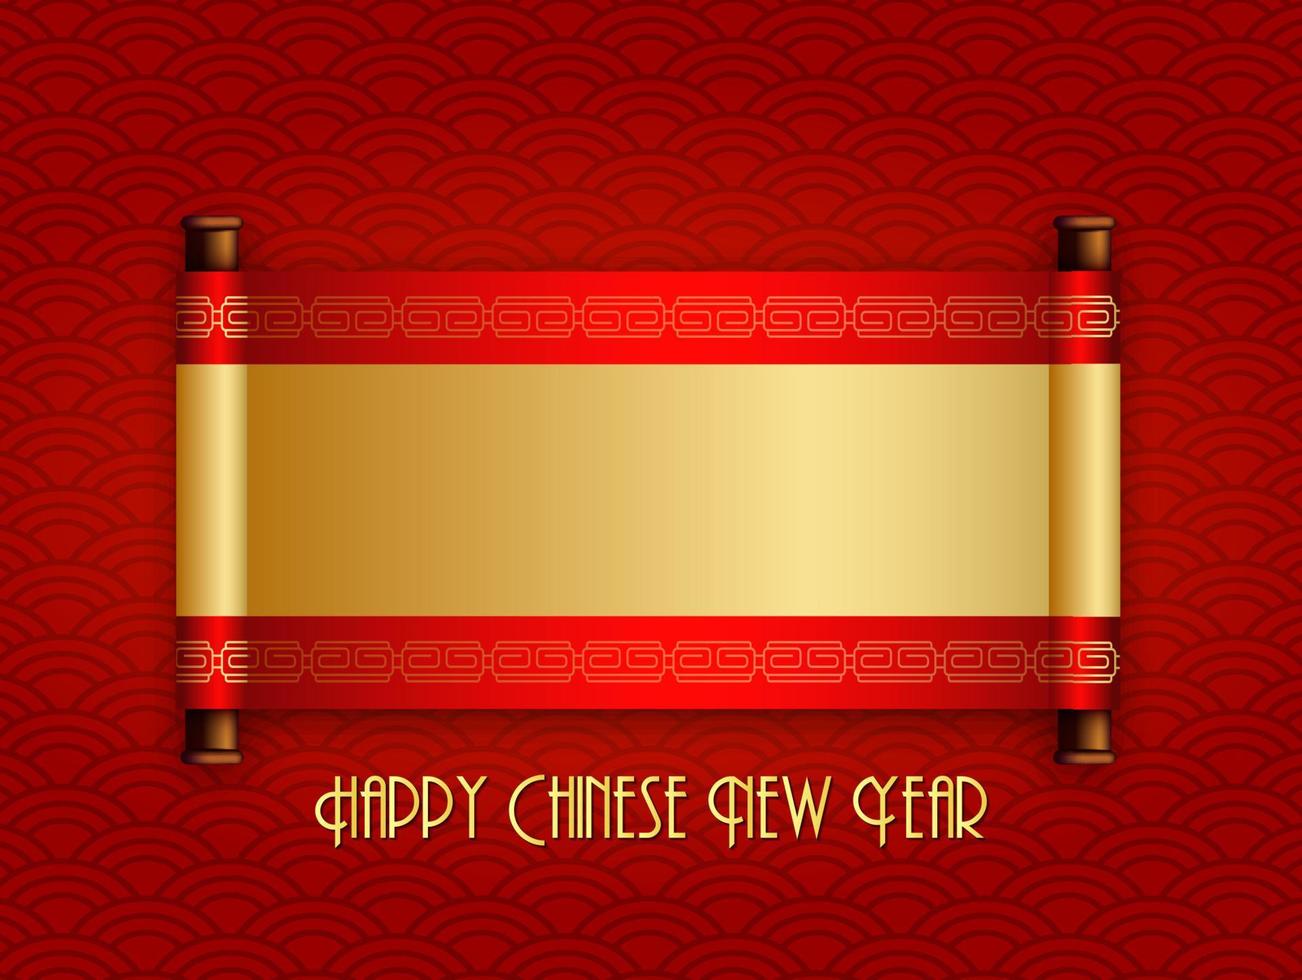 chinese nieuwjaarswenskaart met chinese scroll. plaats voor uw tekst vector